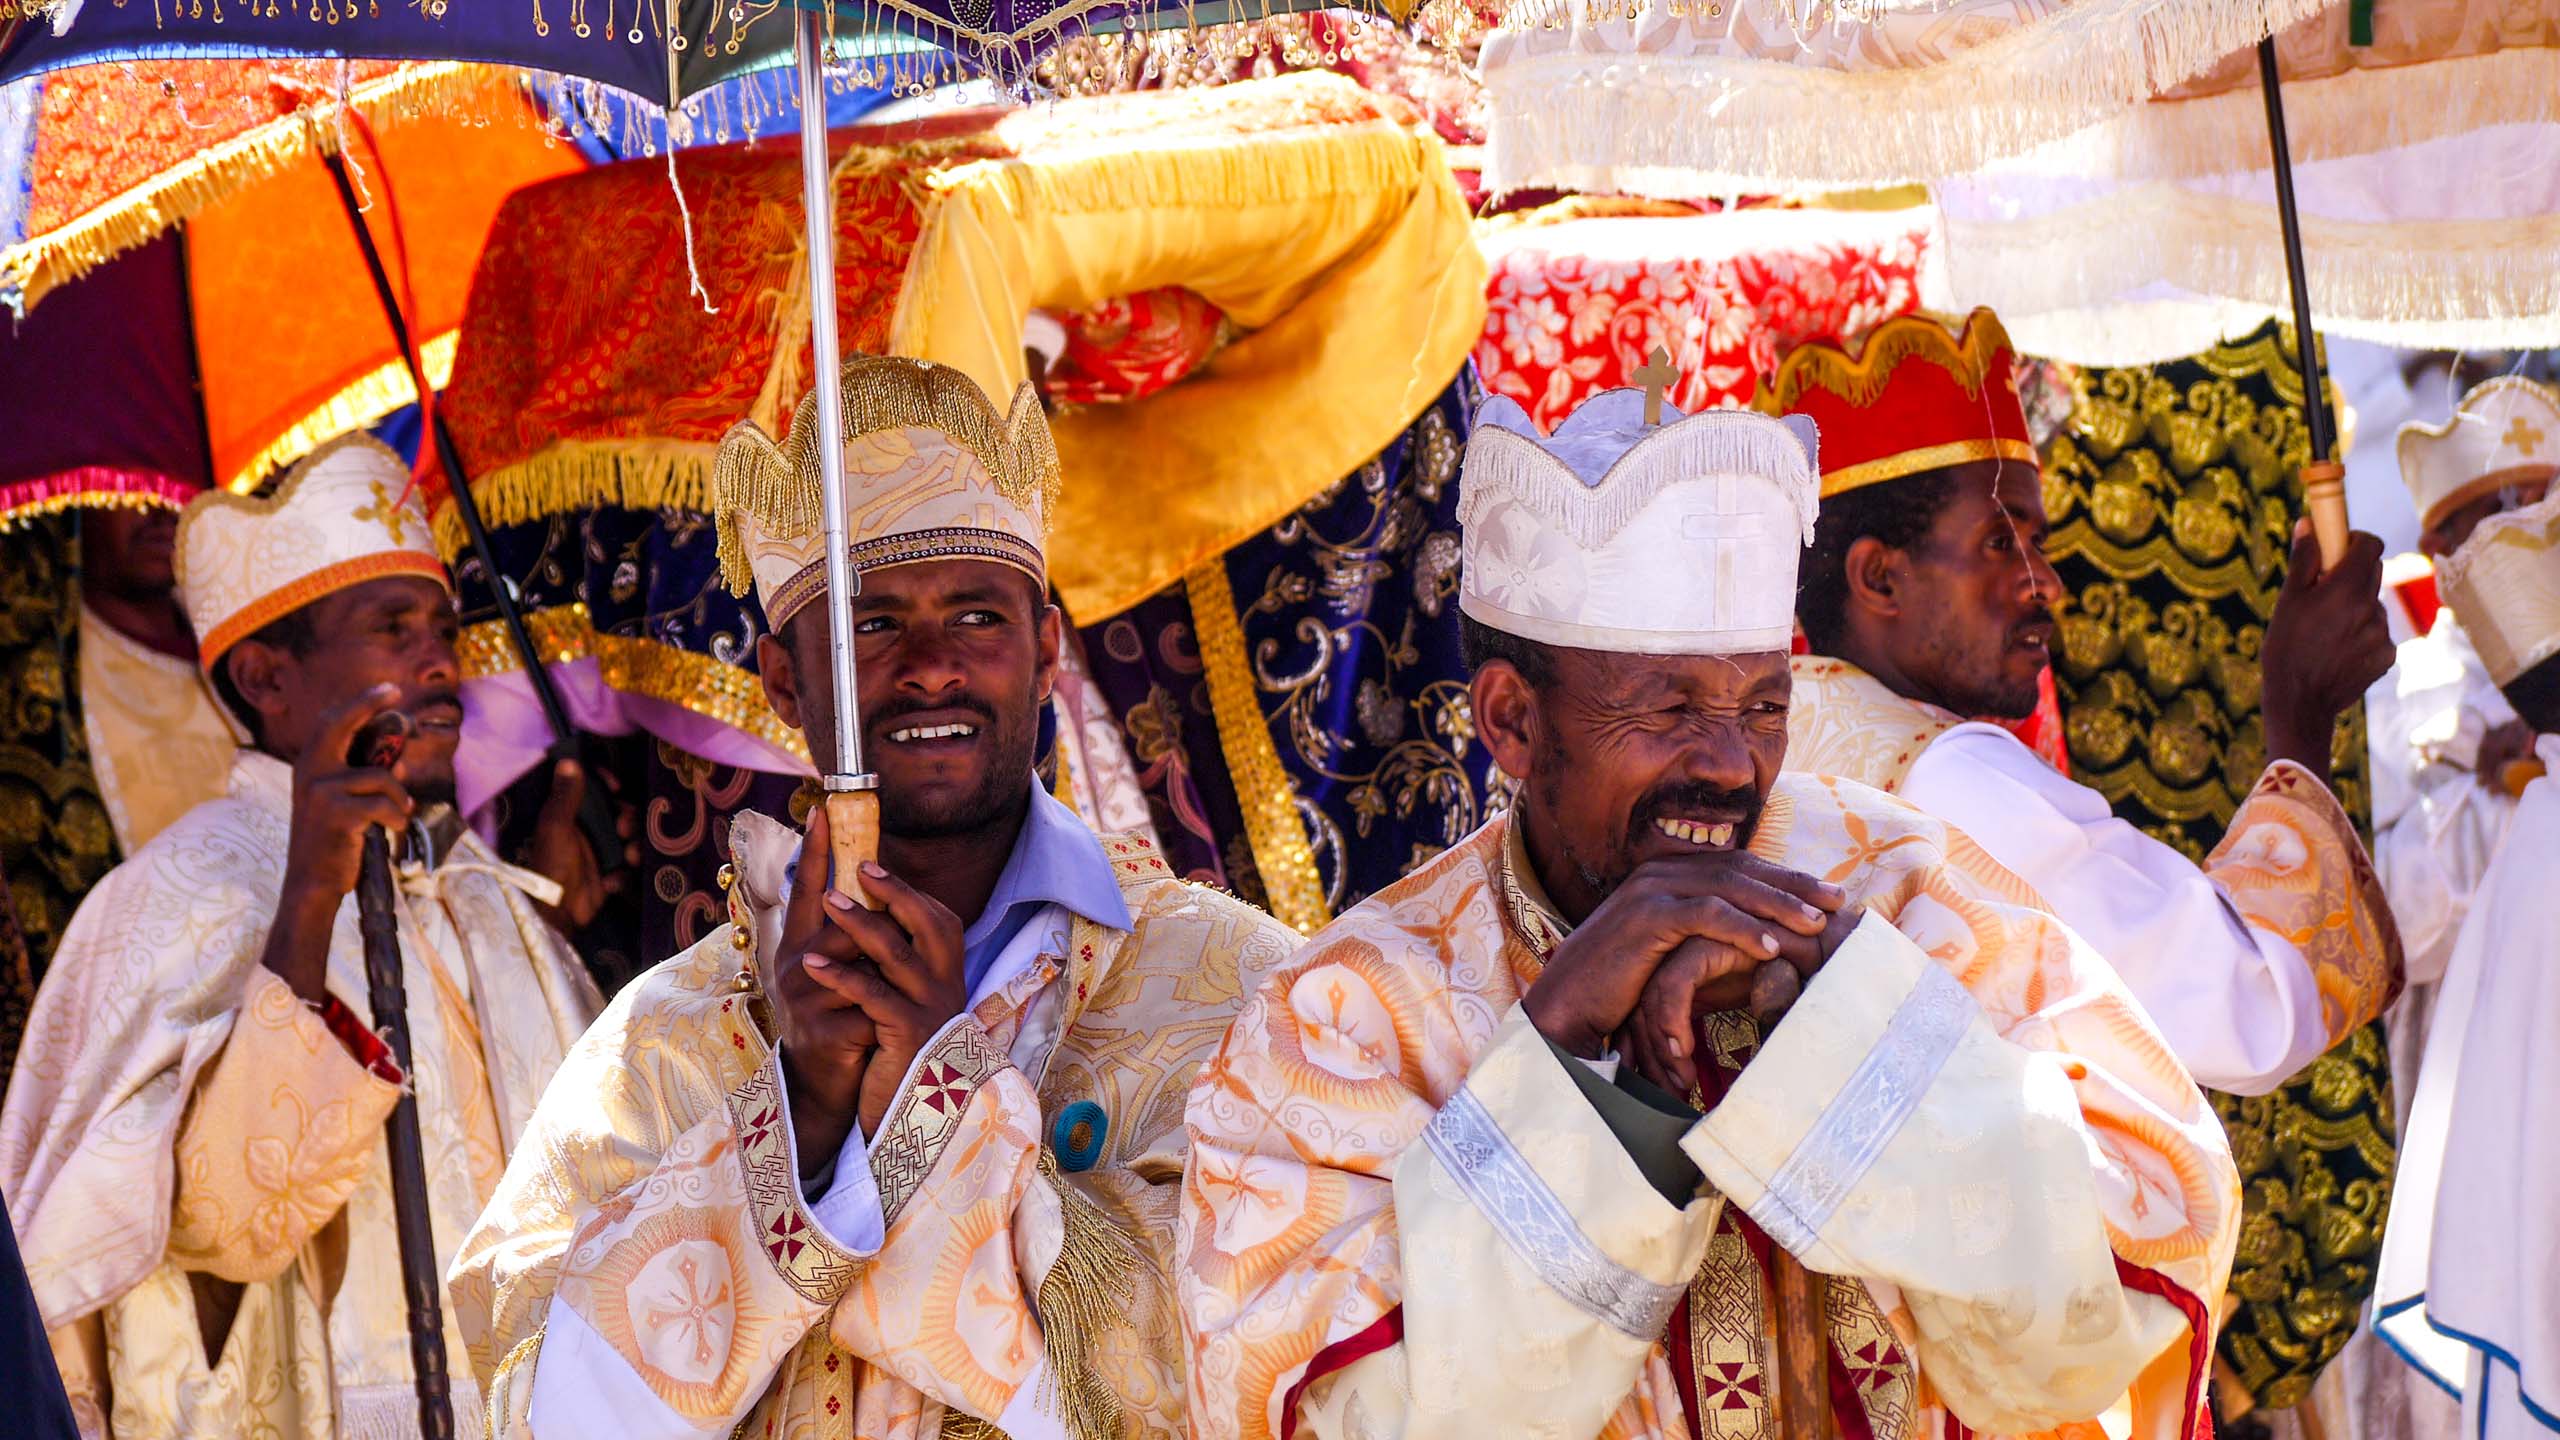 Group of Ethiopian men in festival robes